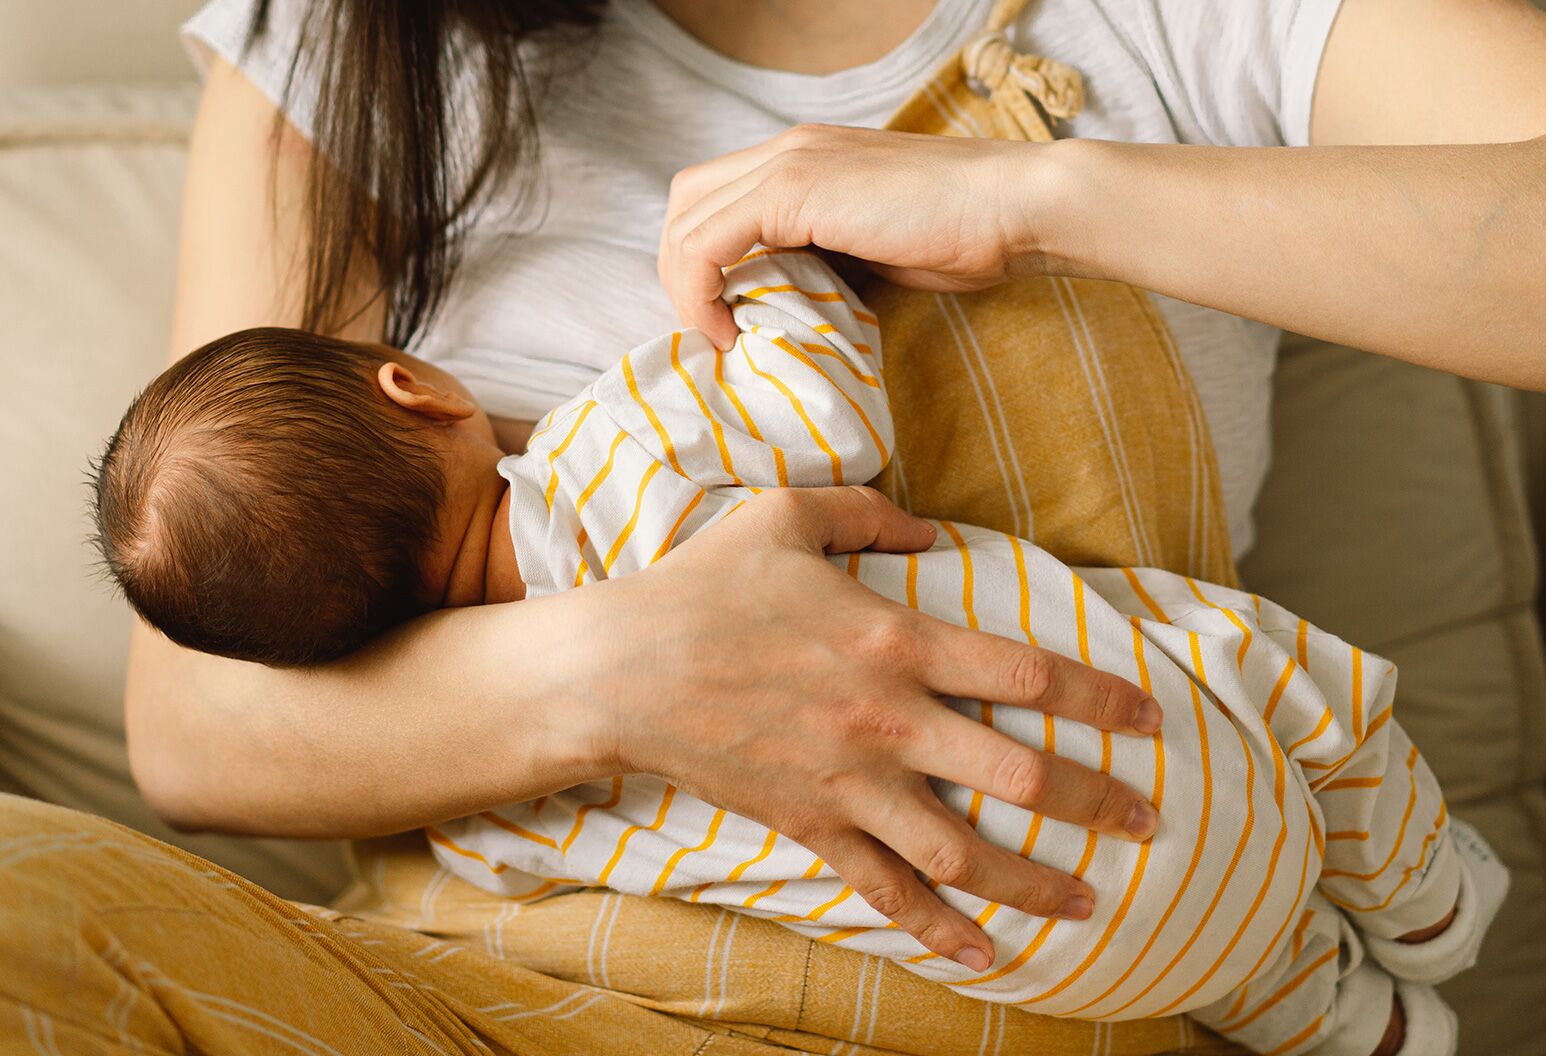 https://dam.northwell.edu/m/7c6a30740625430e/Drupal-TheWell_breastfeeding-best-practices_AS_430354782.jpg